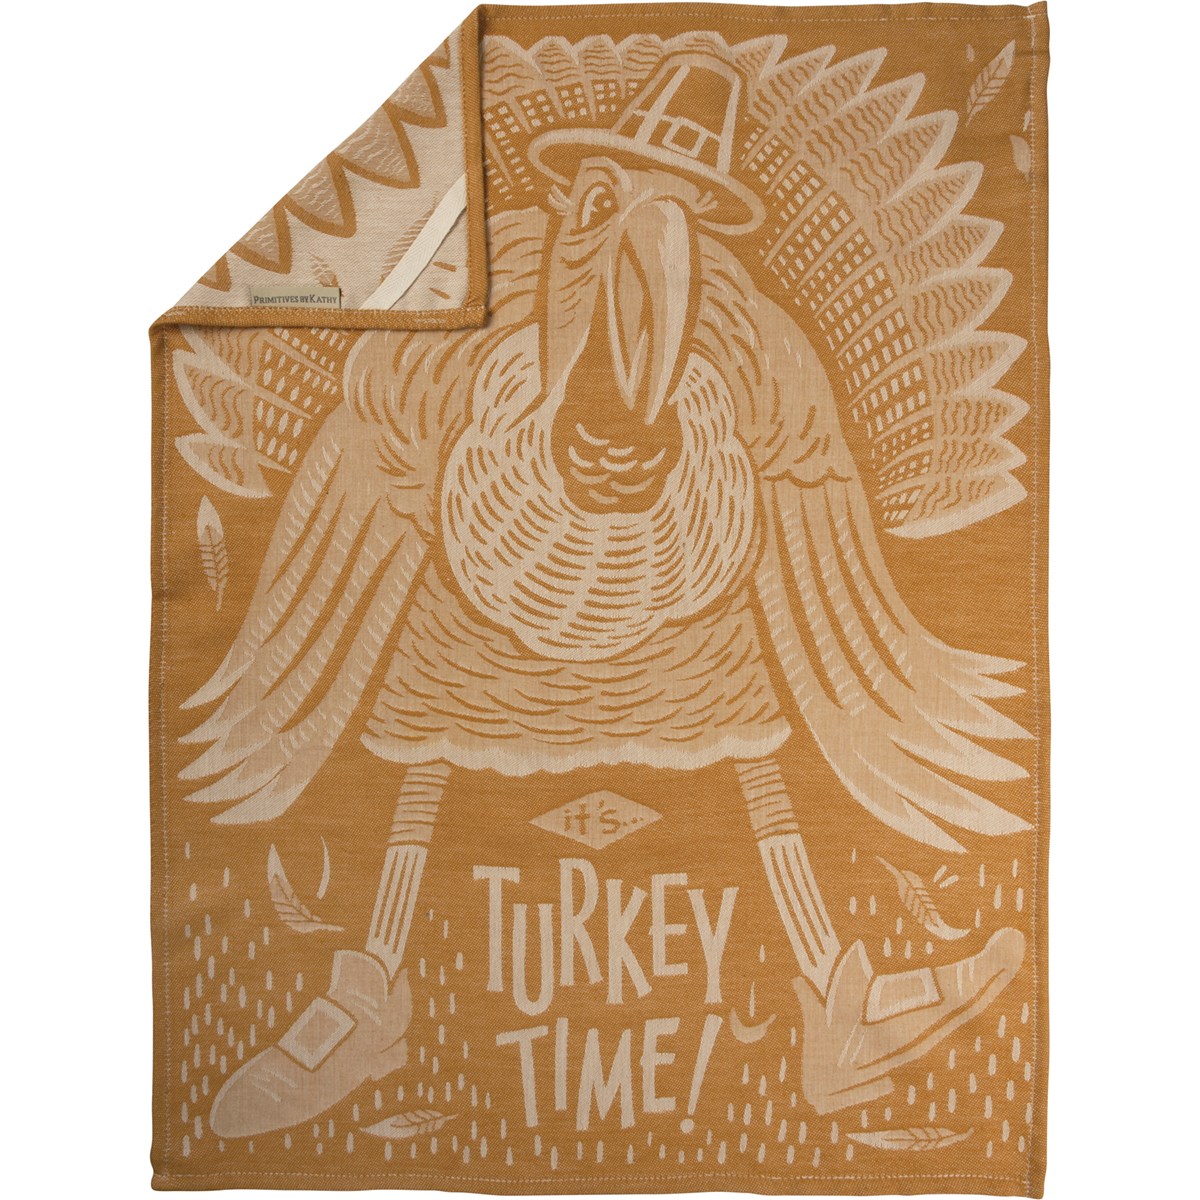 It's Turkey Time Kitchen Towel - Cotton